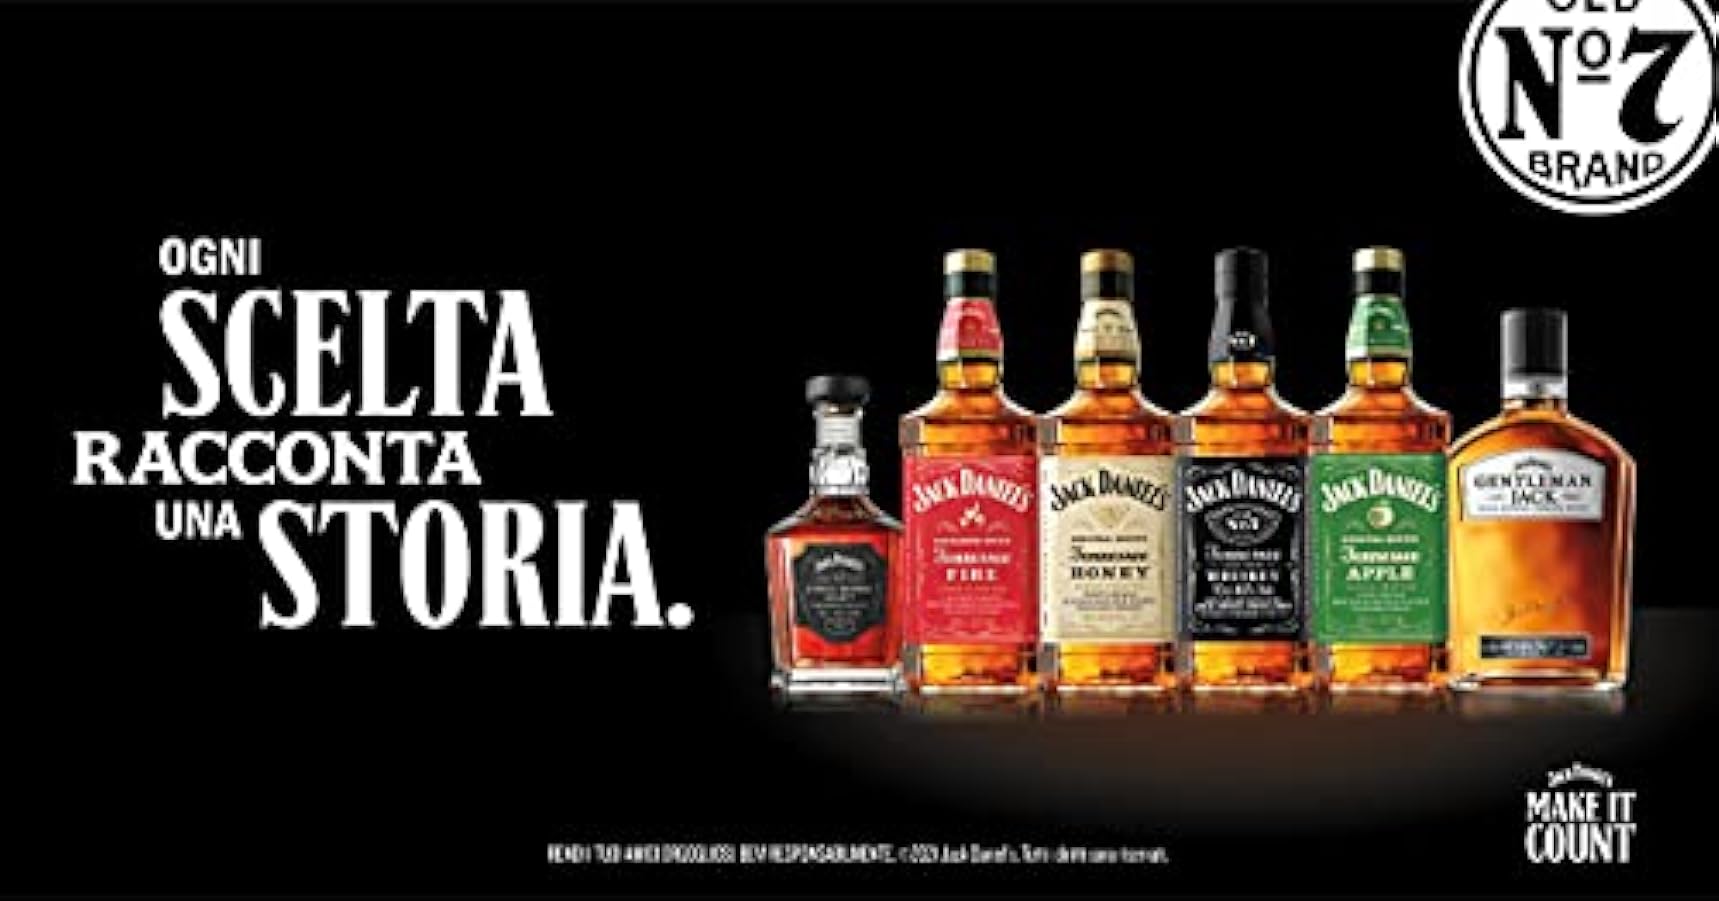 Jack Daniel’s Old No.7 Tennessee Whiskey 150cl - Whiskey filtrato attraverso il carbone. 40% vol. 614886149